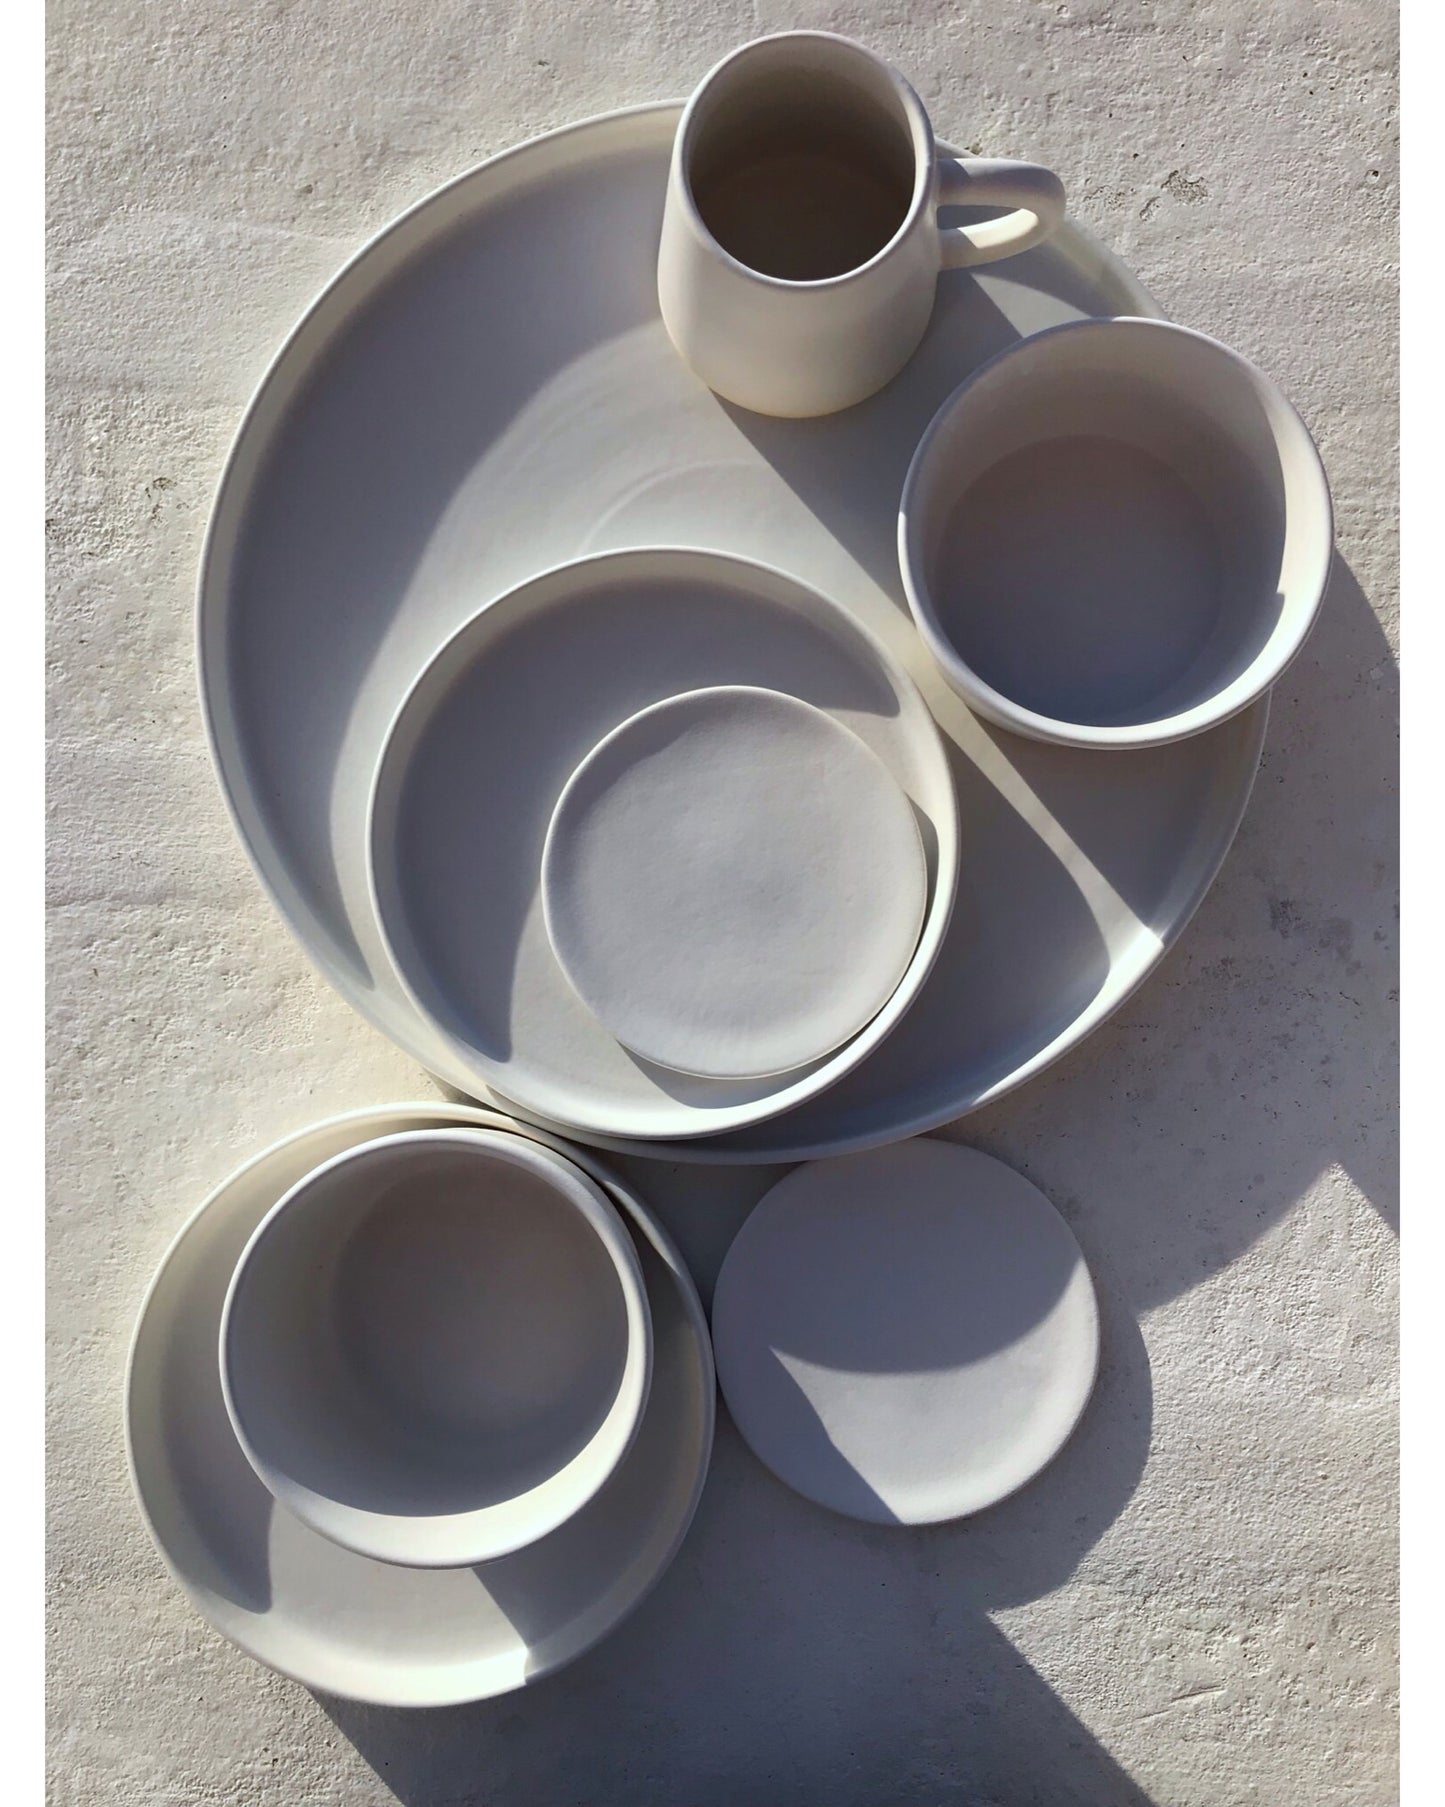 Matte plates, bowls, mug and saucer